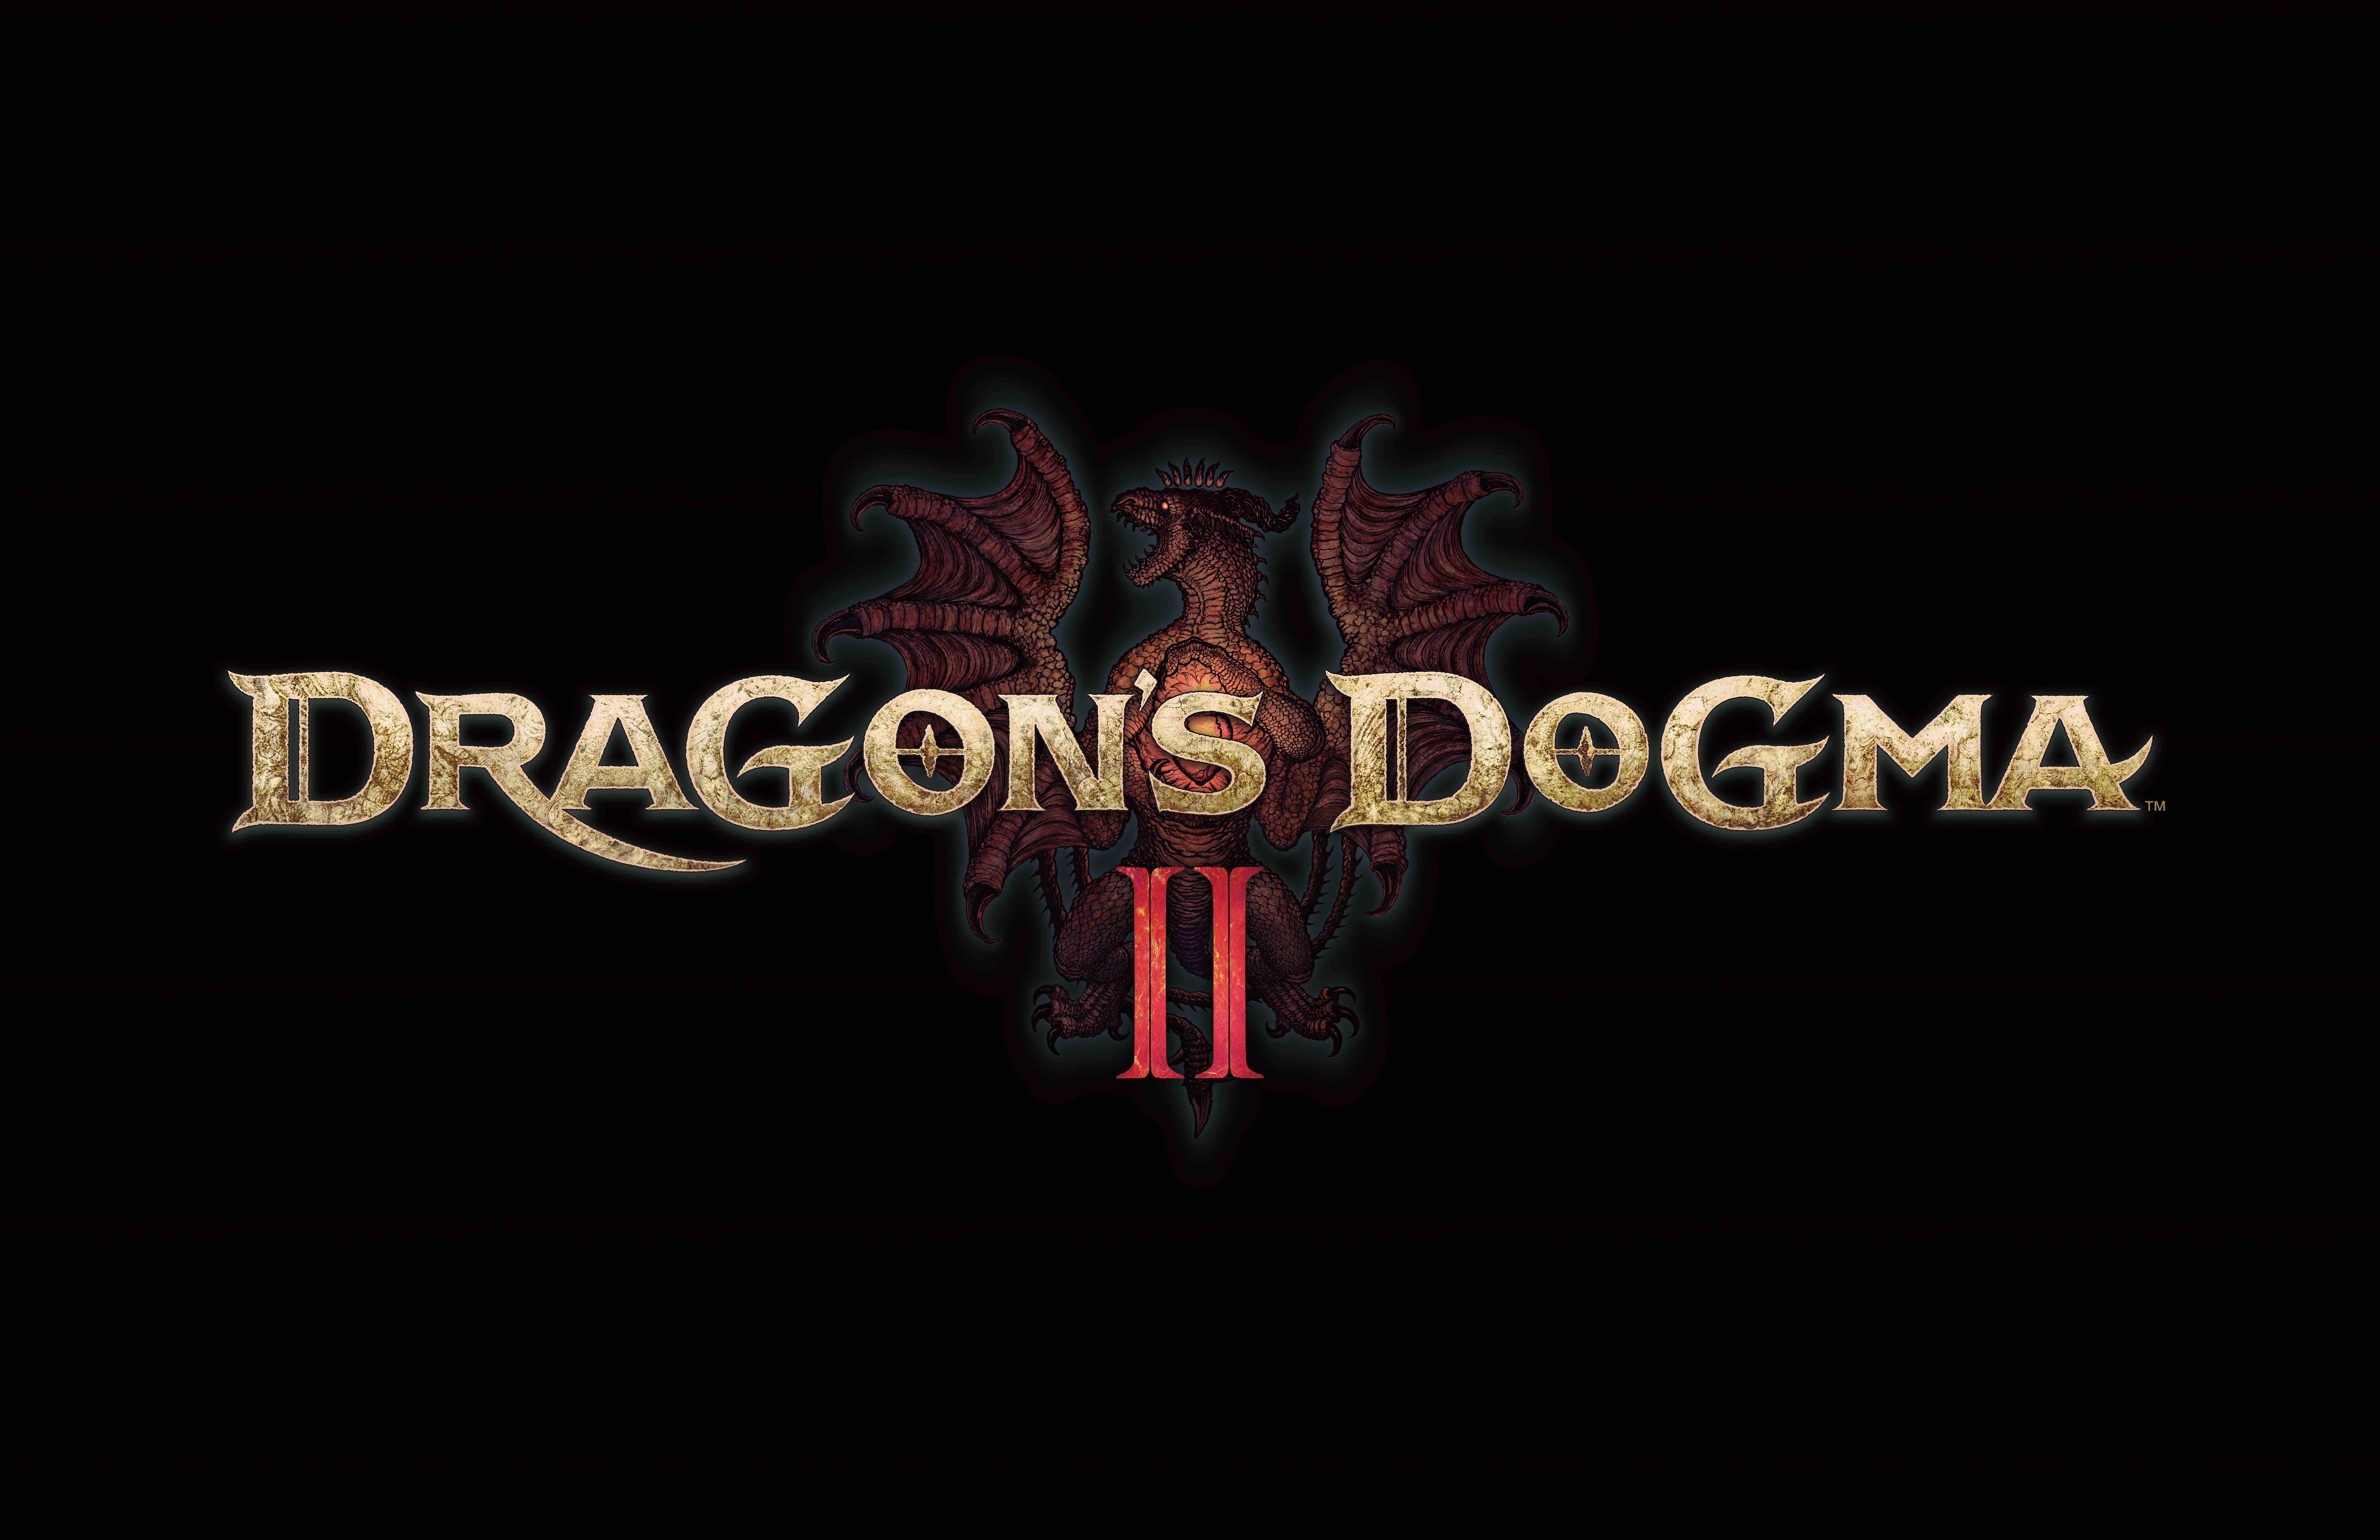 Dragon's Dogma 2: Everything we know so far